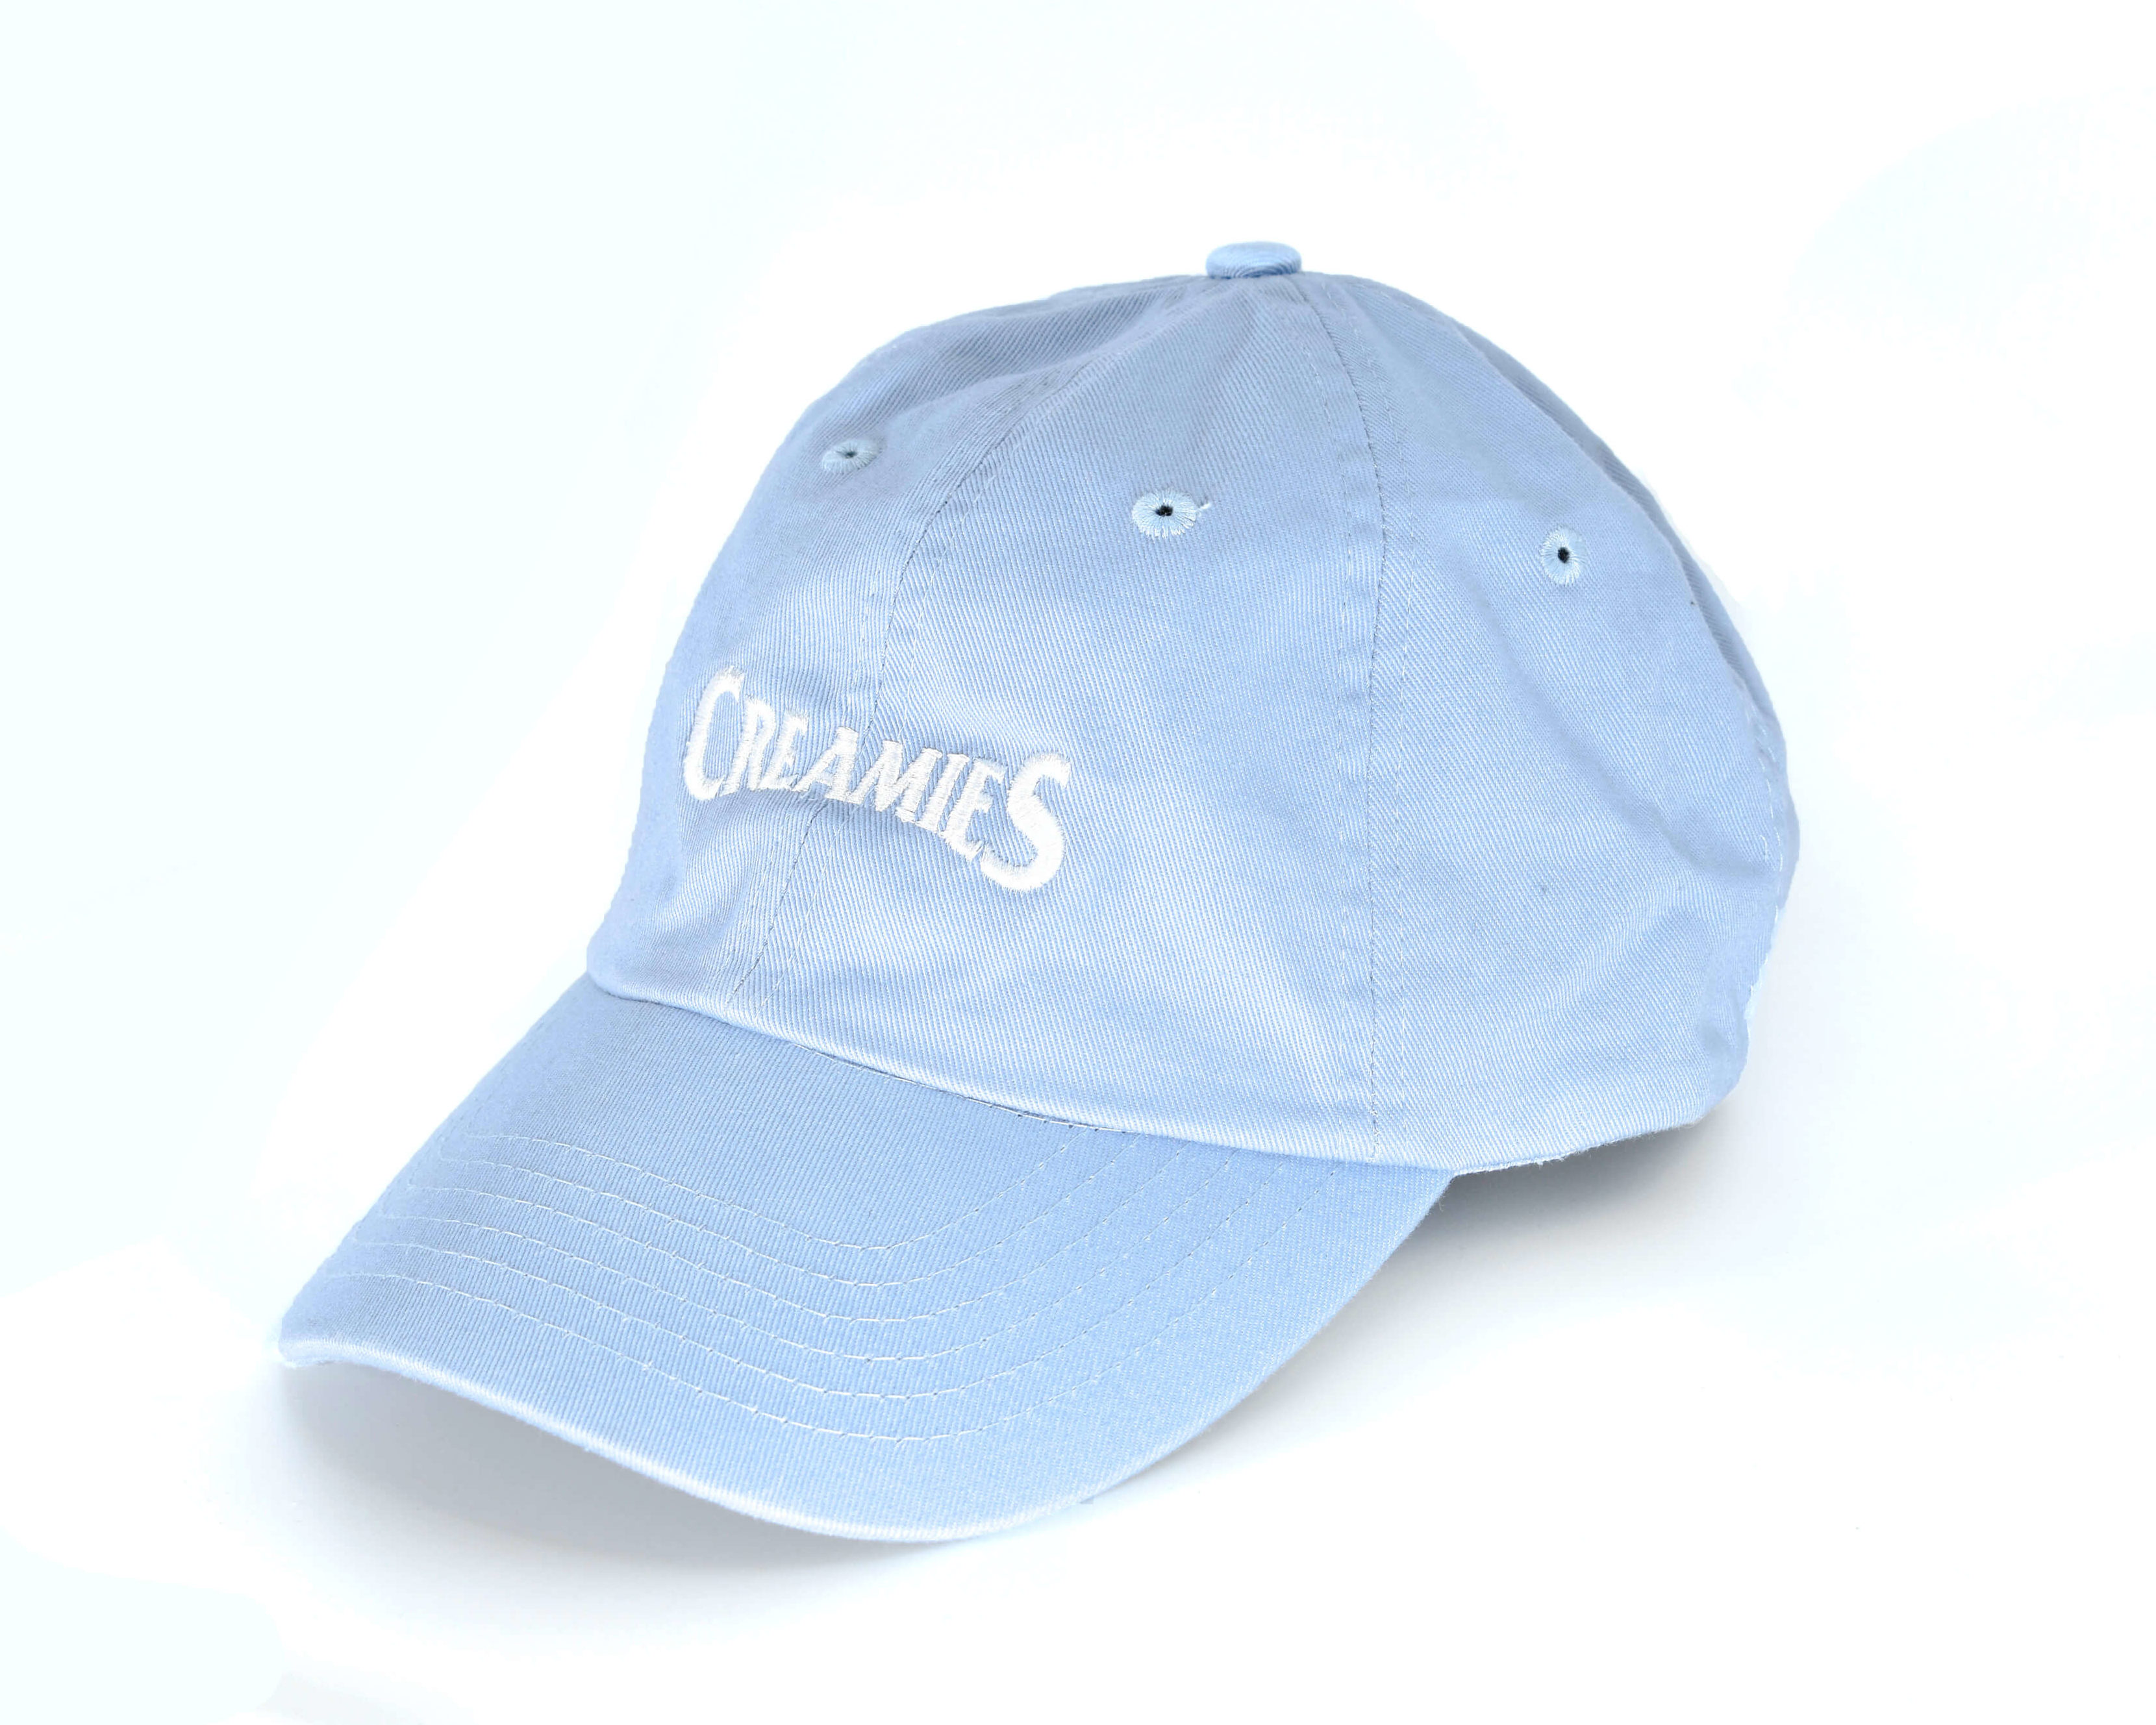 Creamies Baby Blue Dad Hat